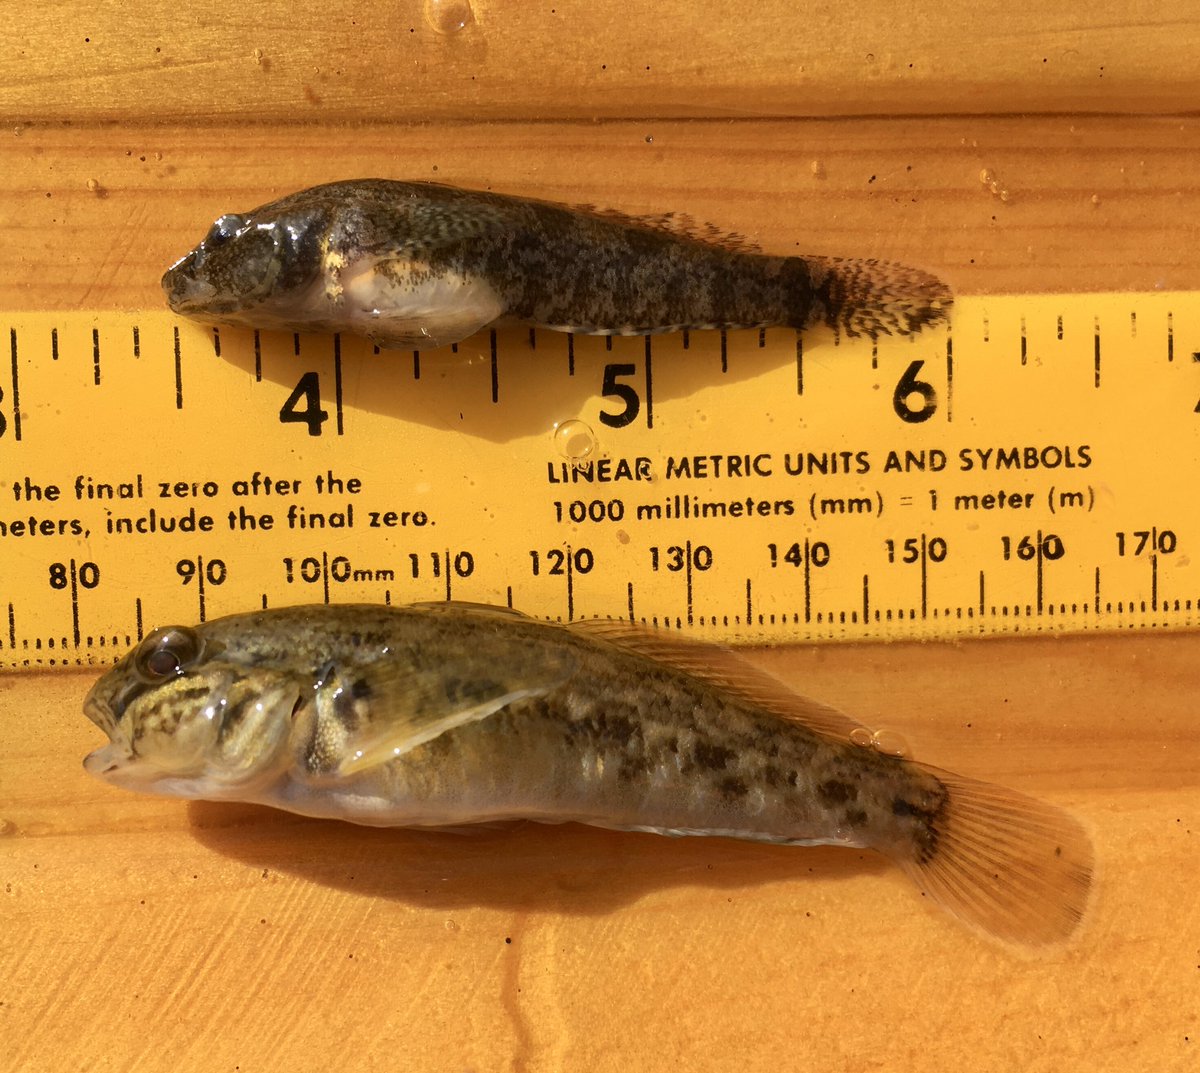 Lake St Clair Fish Species Chart